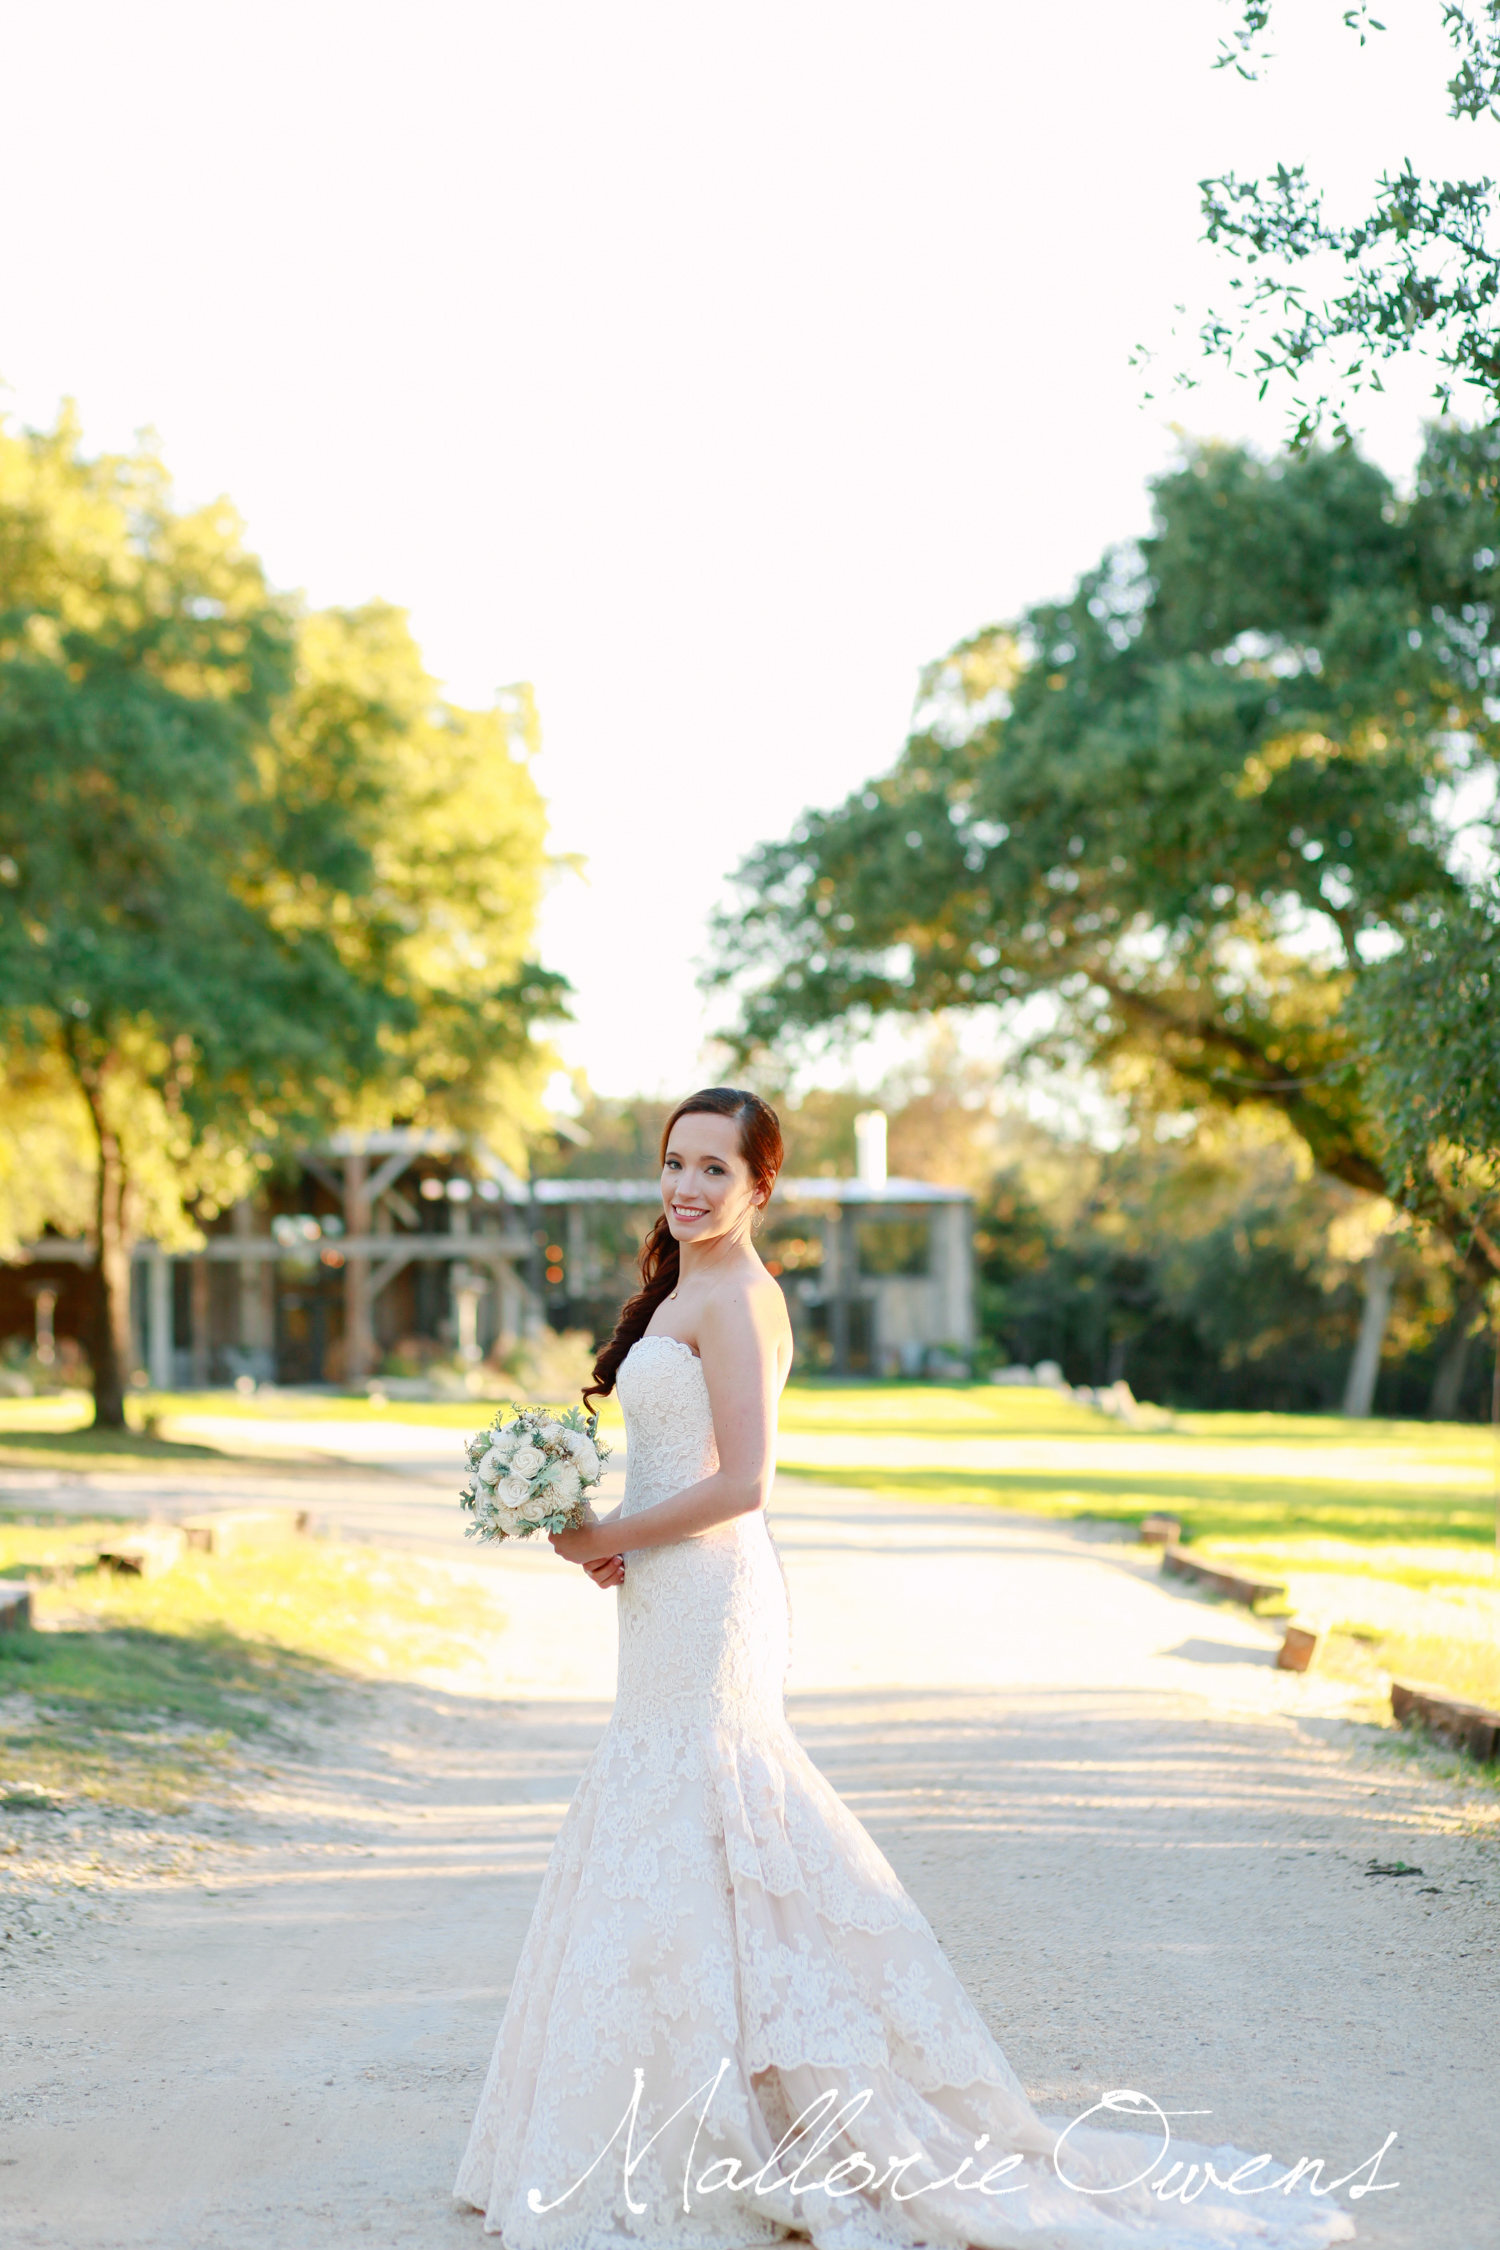 Austin Wedding Photographer, The Creek Haus | MALLORIE OWENS